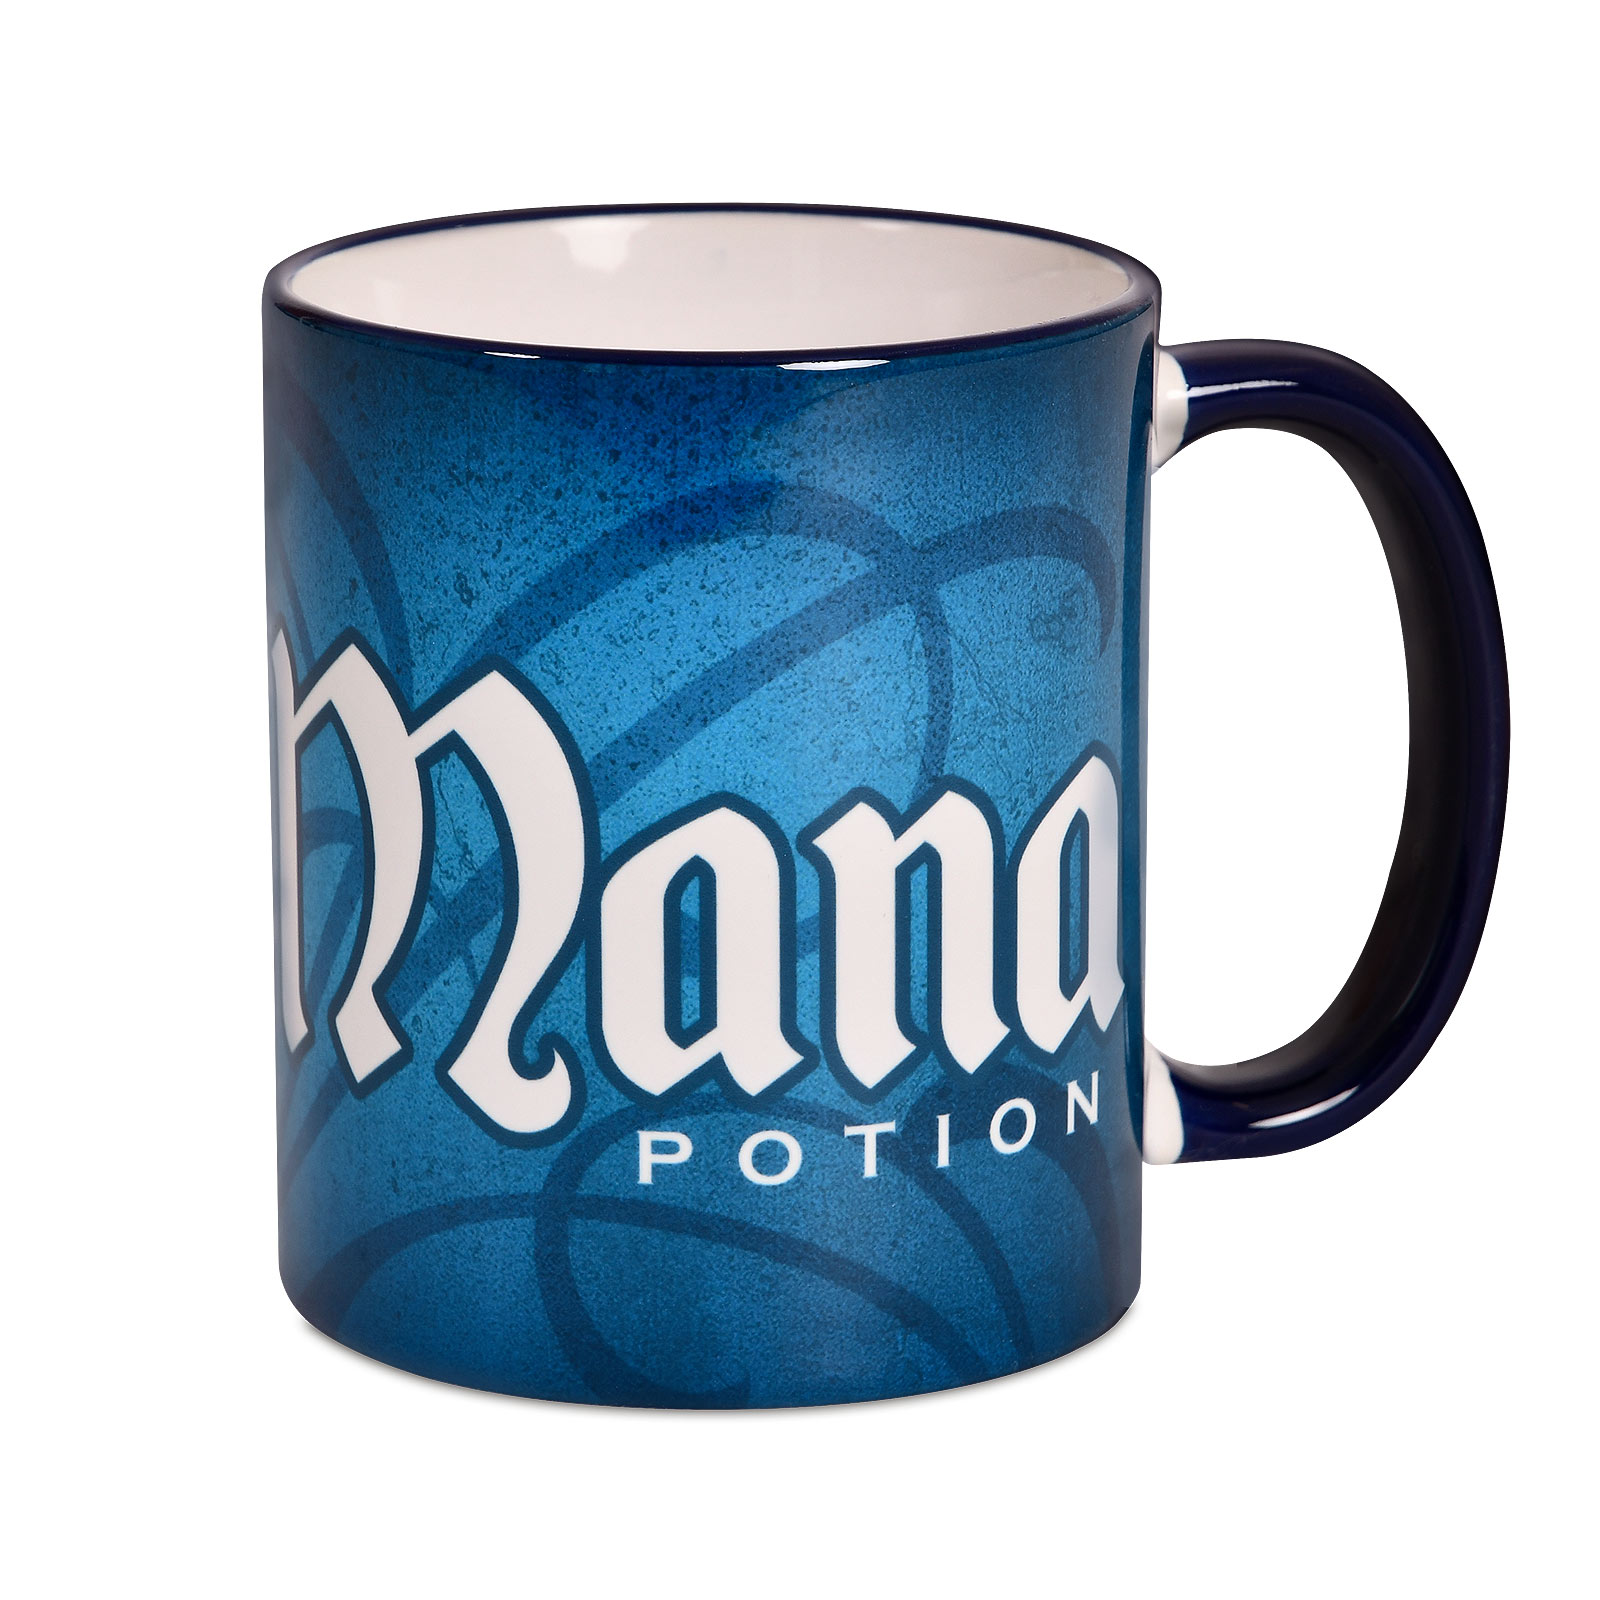 Mana Potion Mug for Gaming Fans